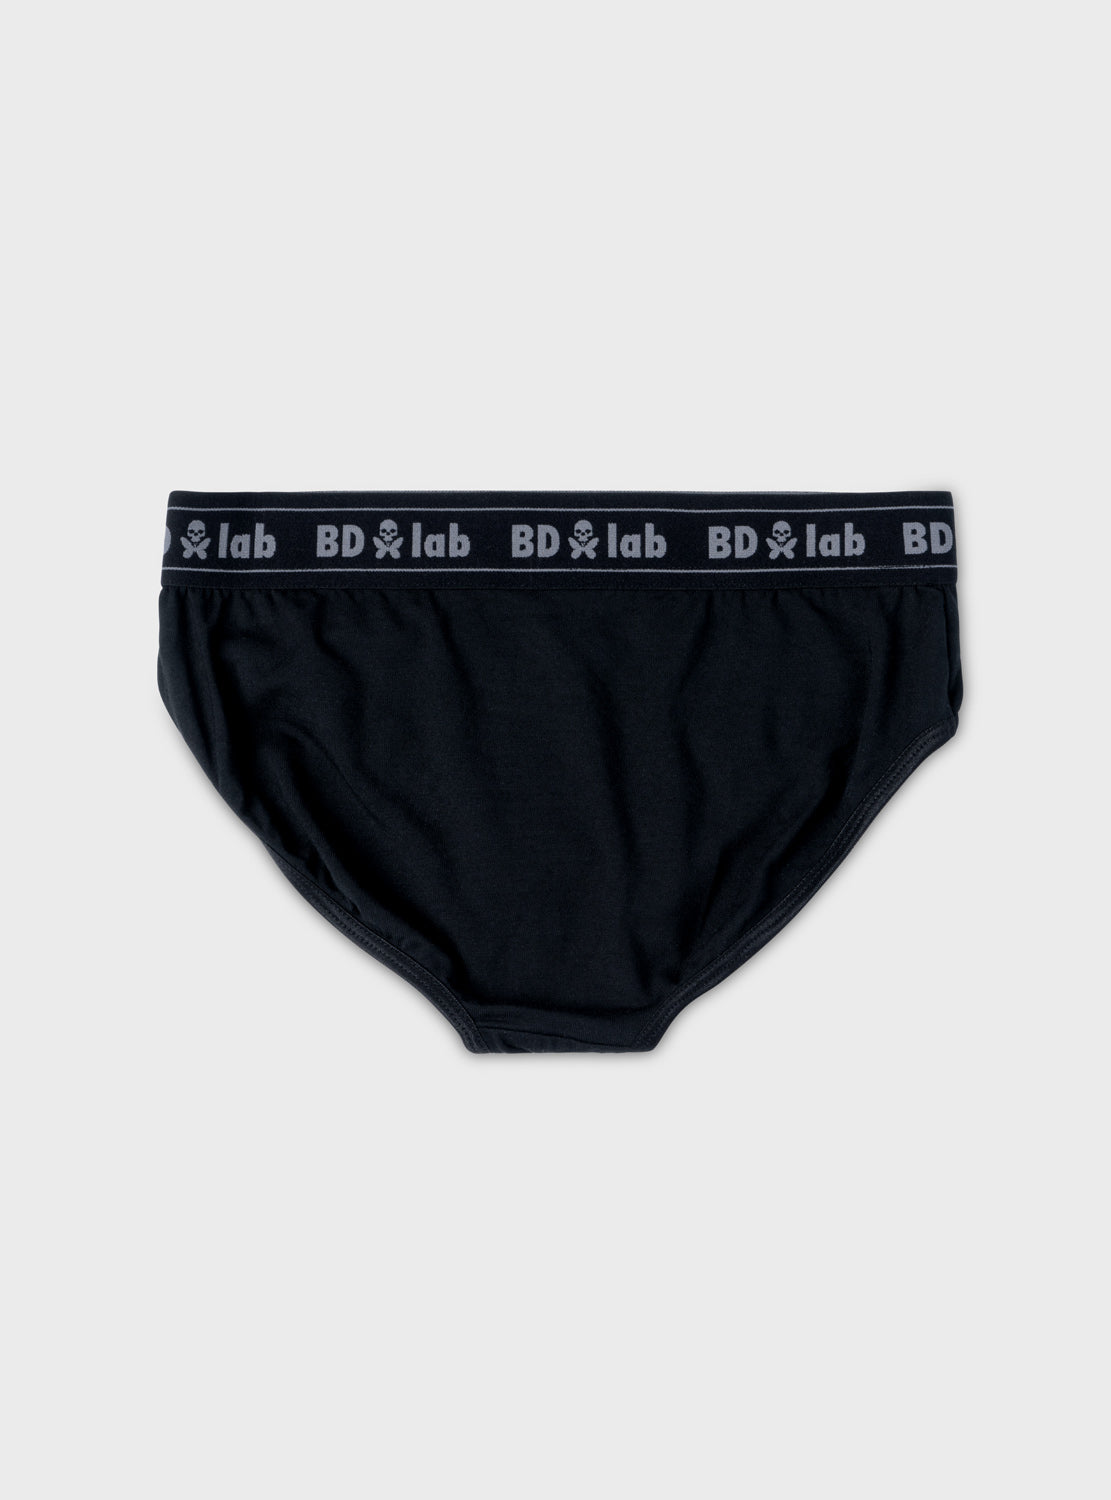 betty designs BDlab Sportswear apparel for Women underwear set